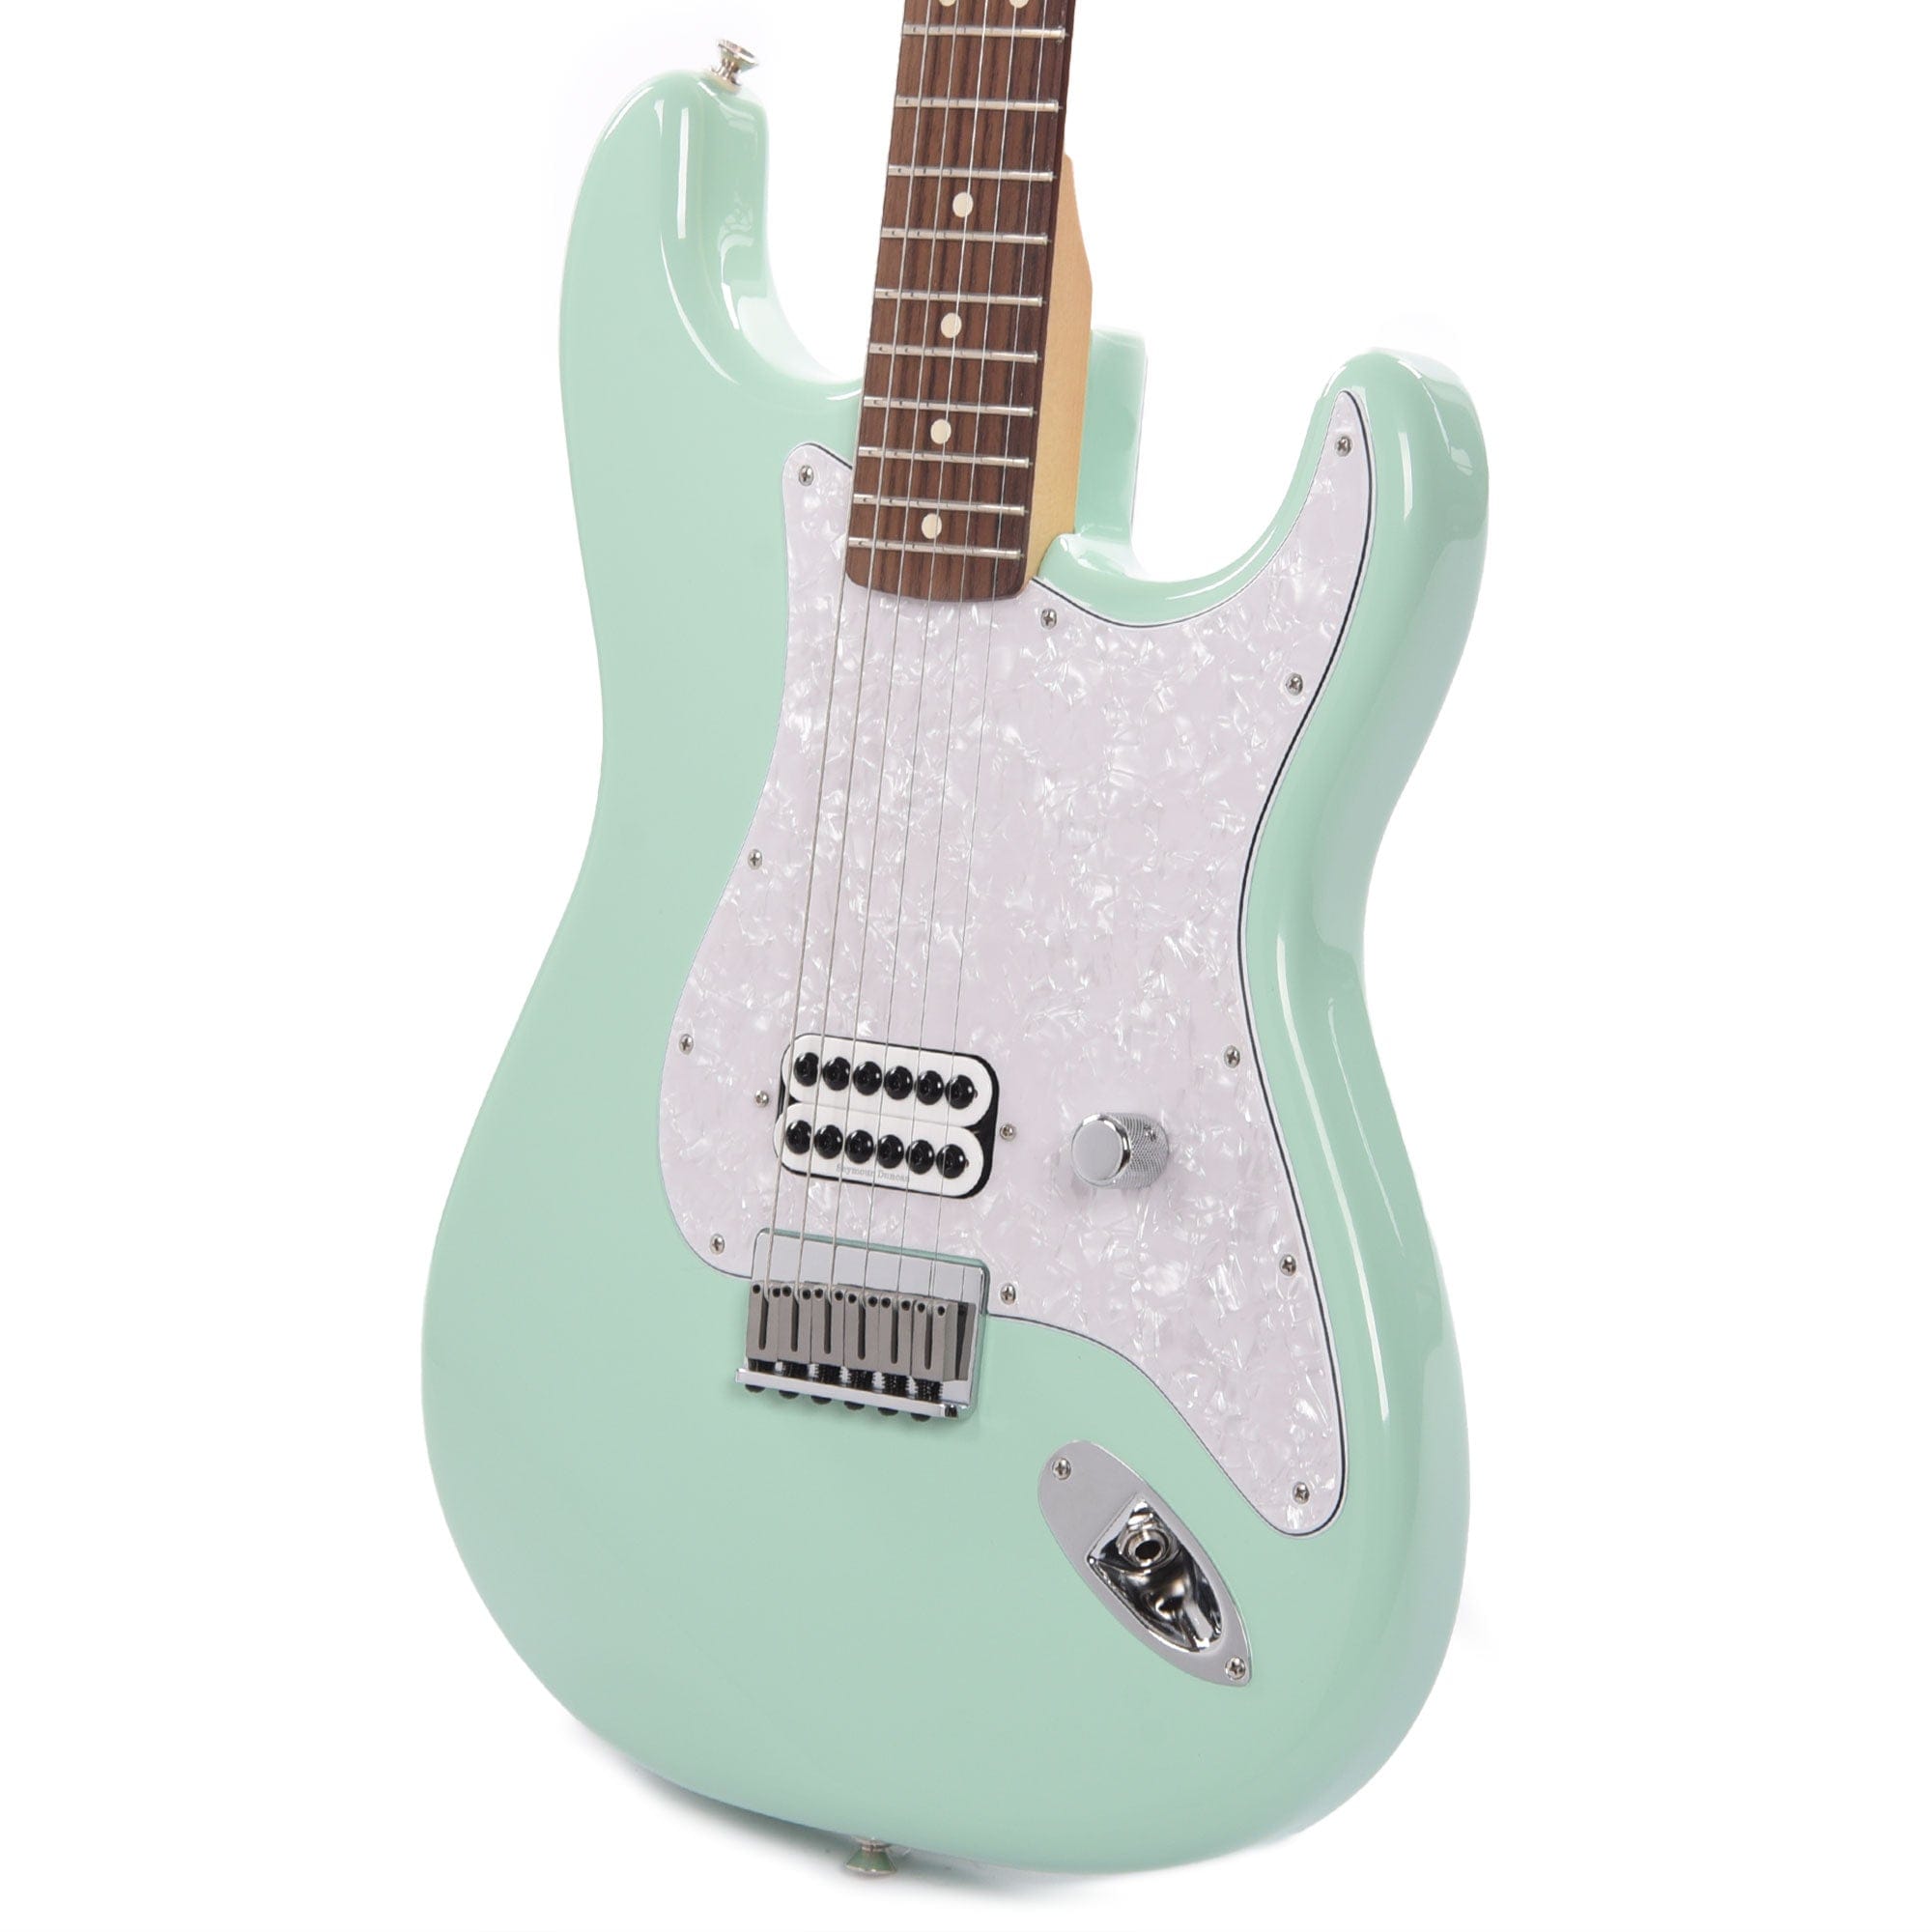 Fender Artist Limited Edition Tom DeLonge Stratocaster Surf Green Electric Guitars / Solid Body